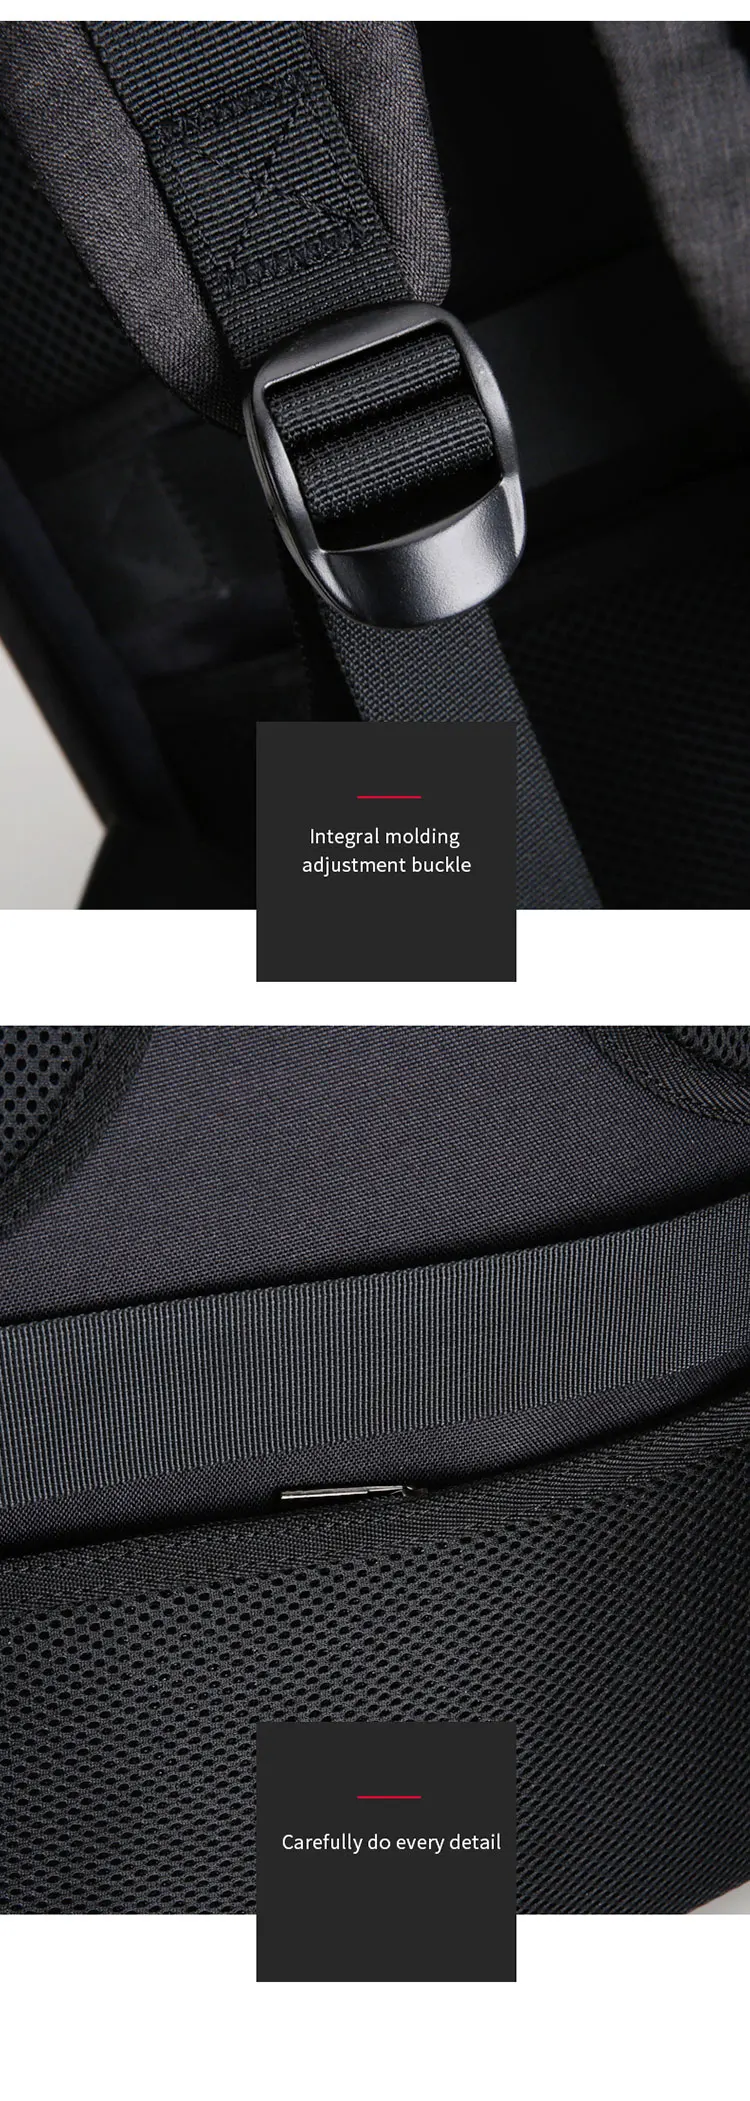 New Design Mark Ryden Wholesale New Product USB Charging Port Bag Laptop Backpack Waterproof School Bags Men Bag MR5911